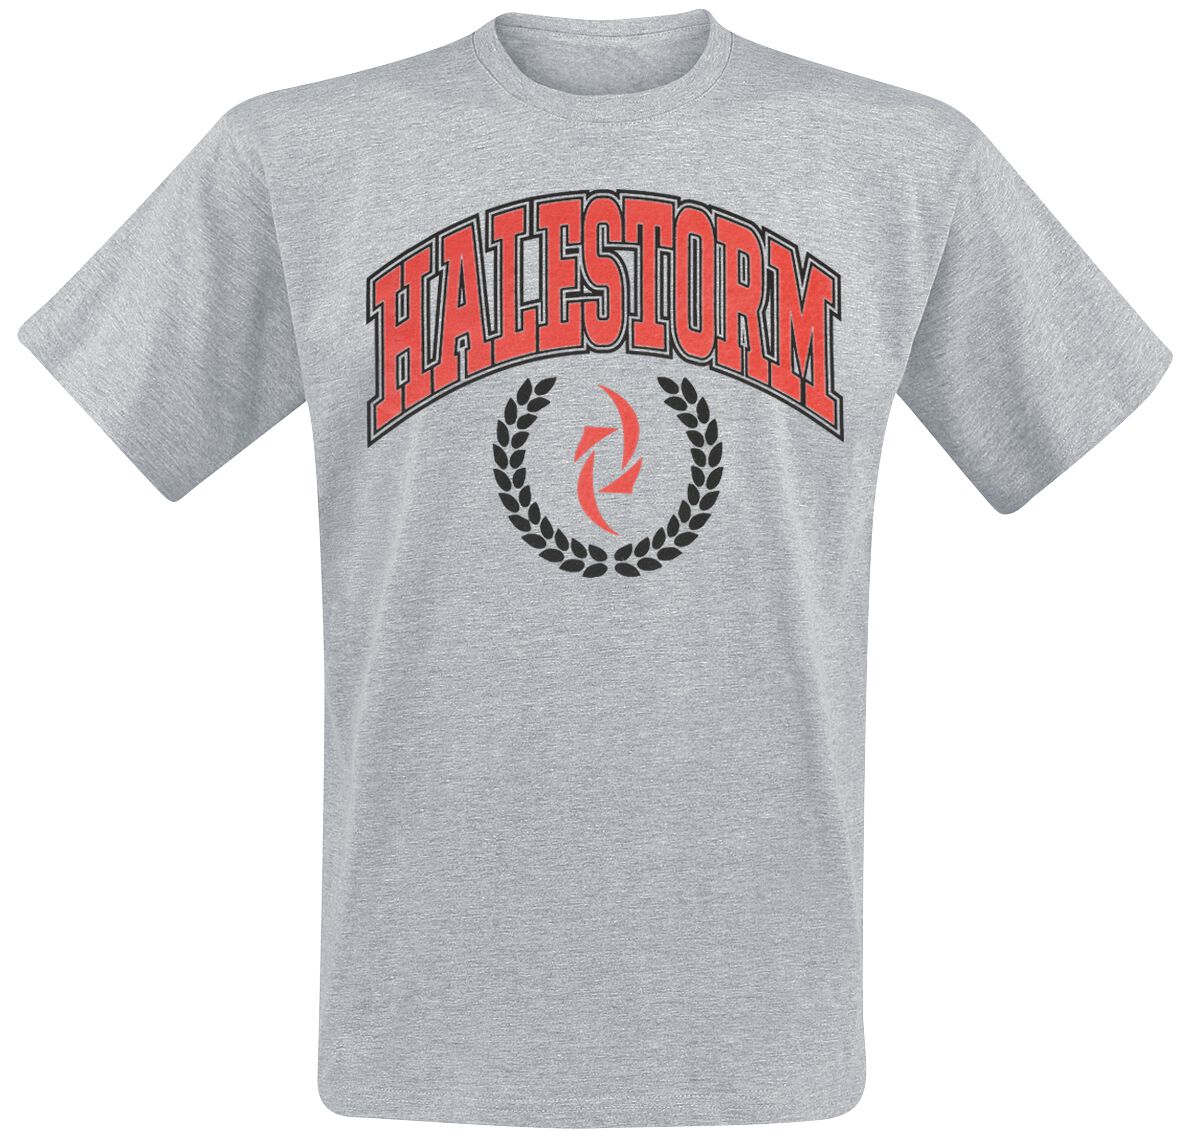 Halestorm Varsity Logo T-Shirt grau meliert in M